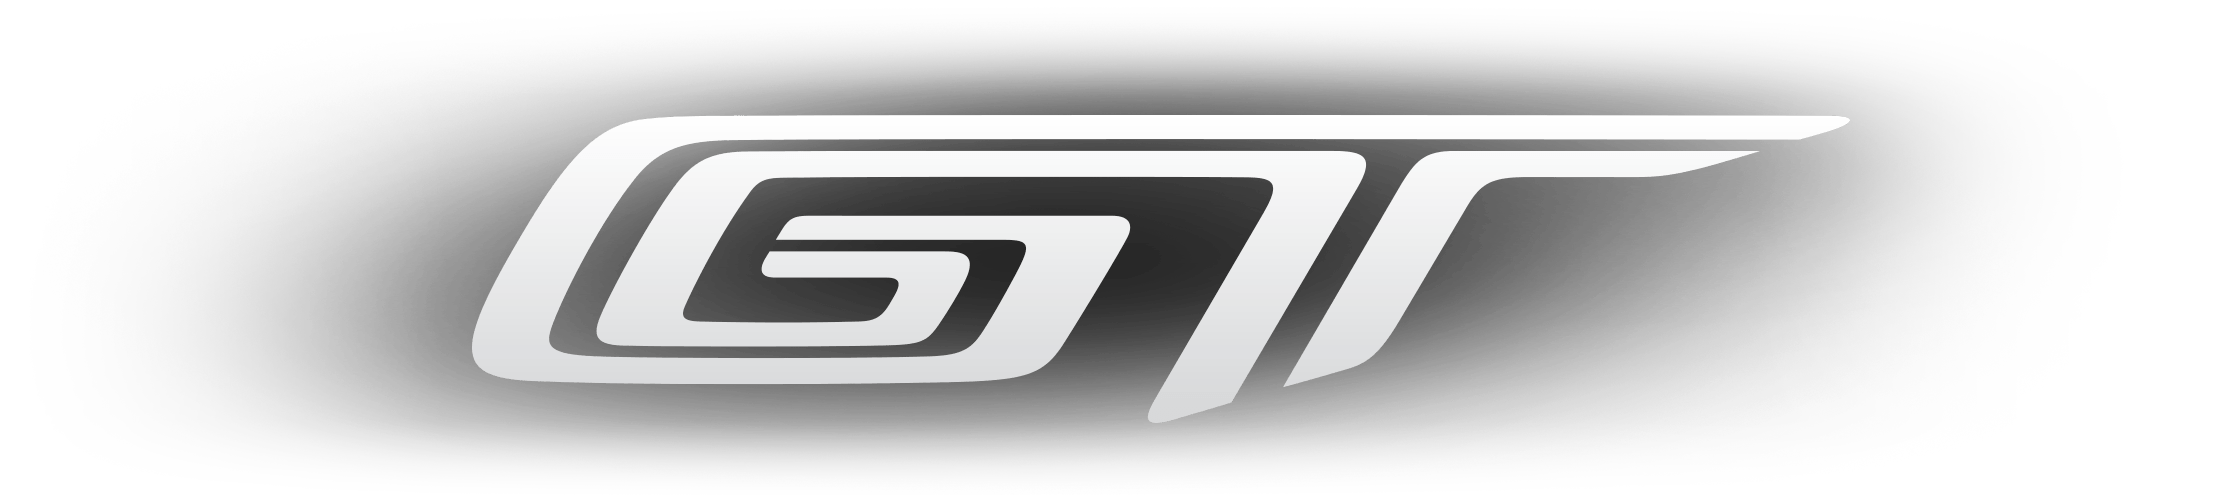 Ford GT Logo - Traxxas Ford GT. Ford Replica RC Car